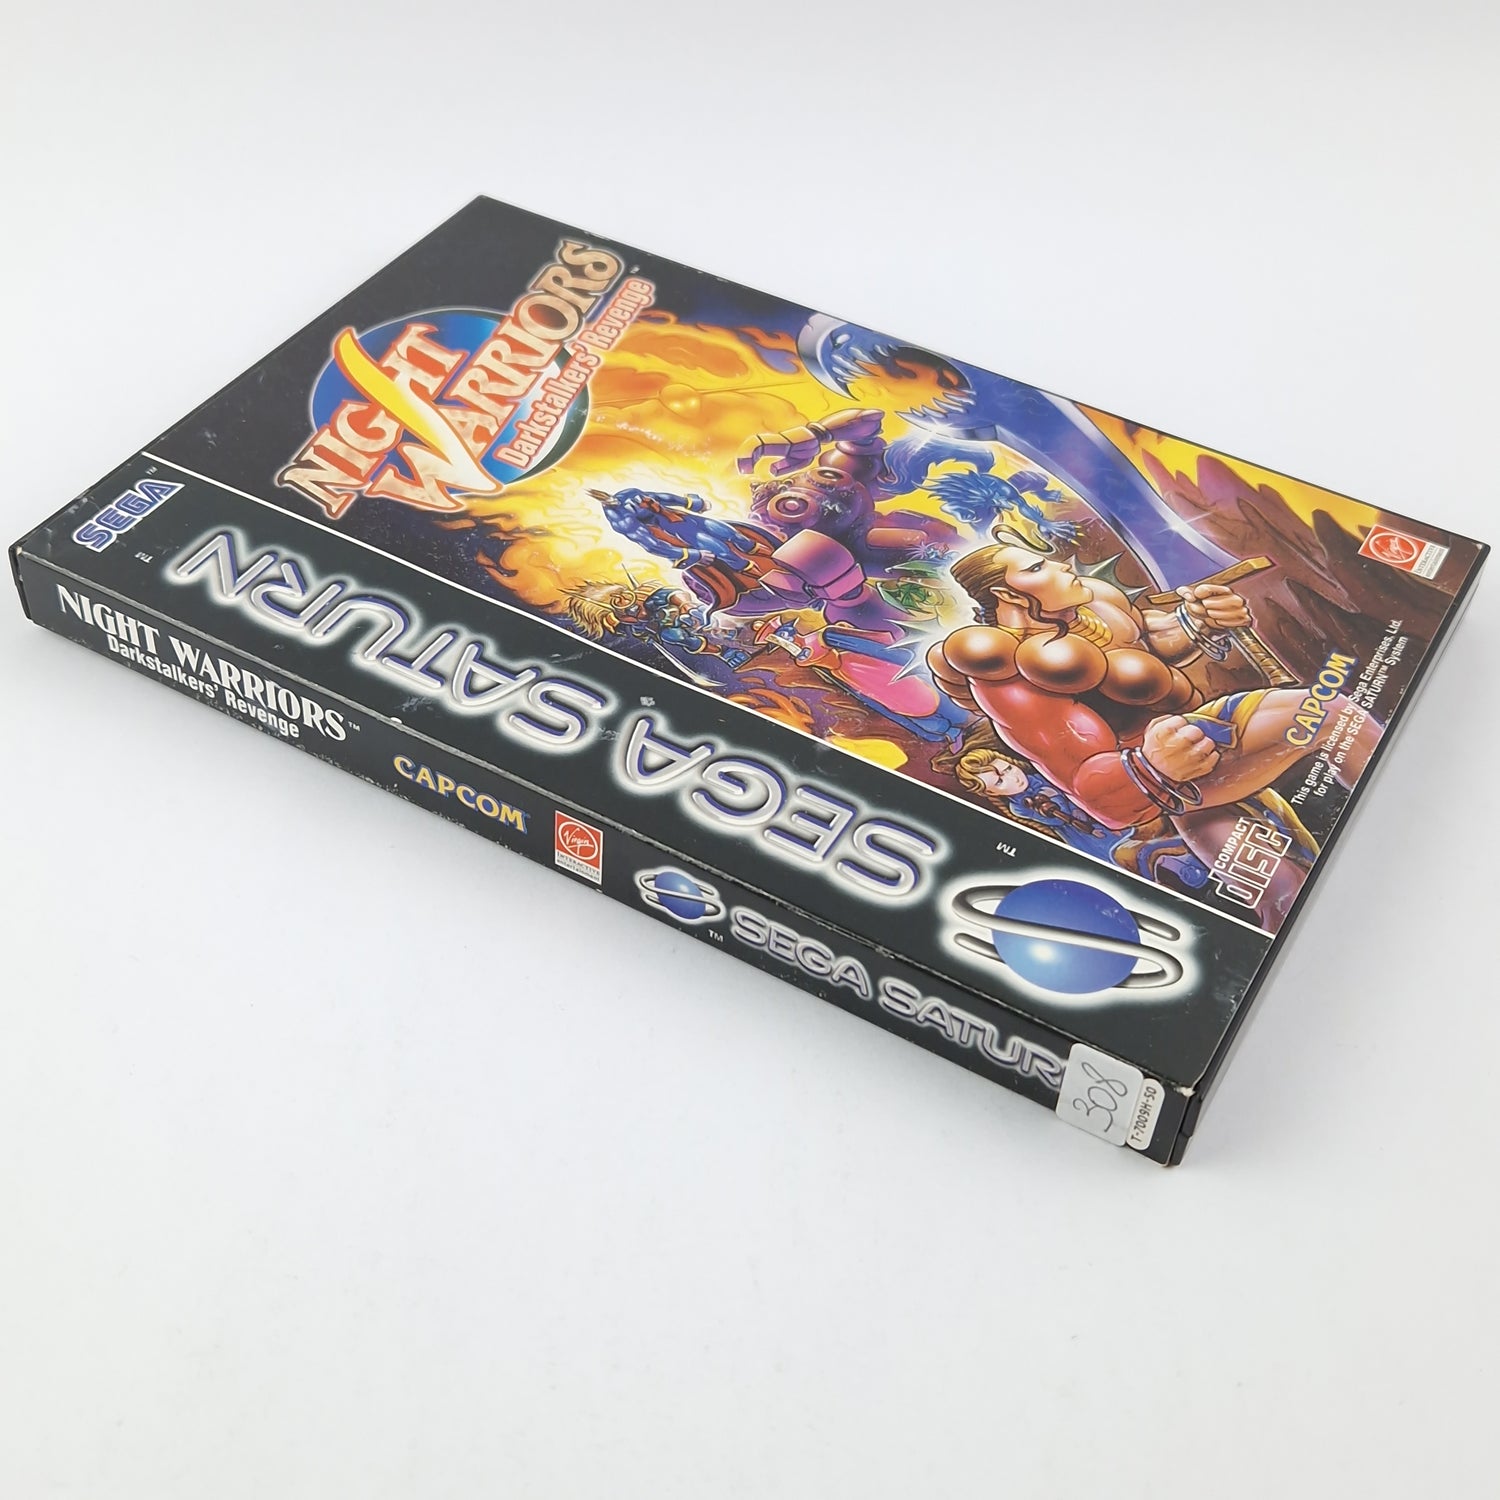 Sega Saturn Spiel : Night Warriors Darkstalkers Revenge - CD Anleitung OVP PAL